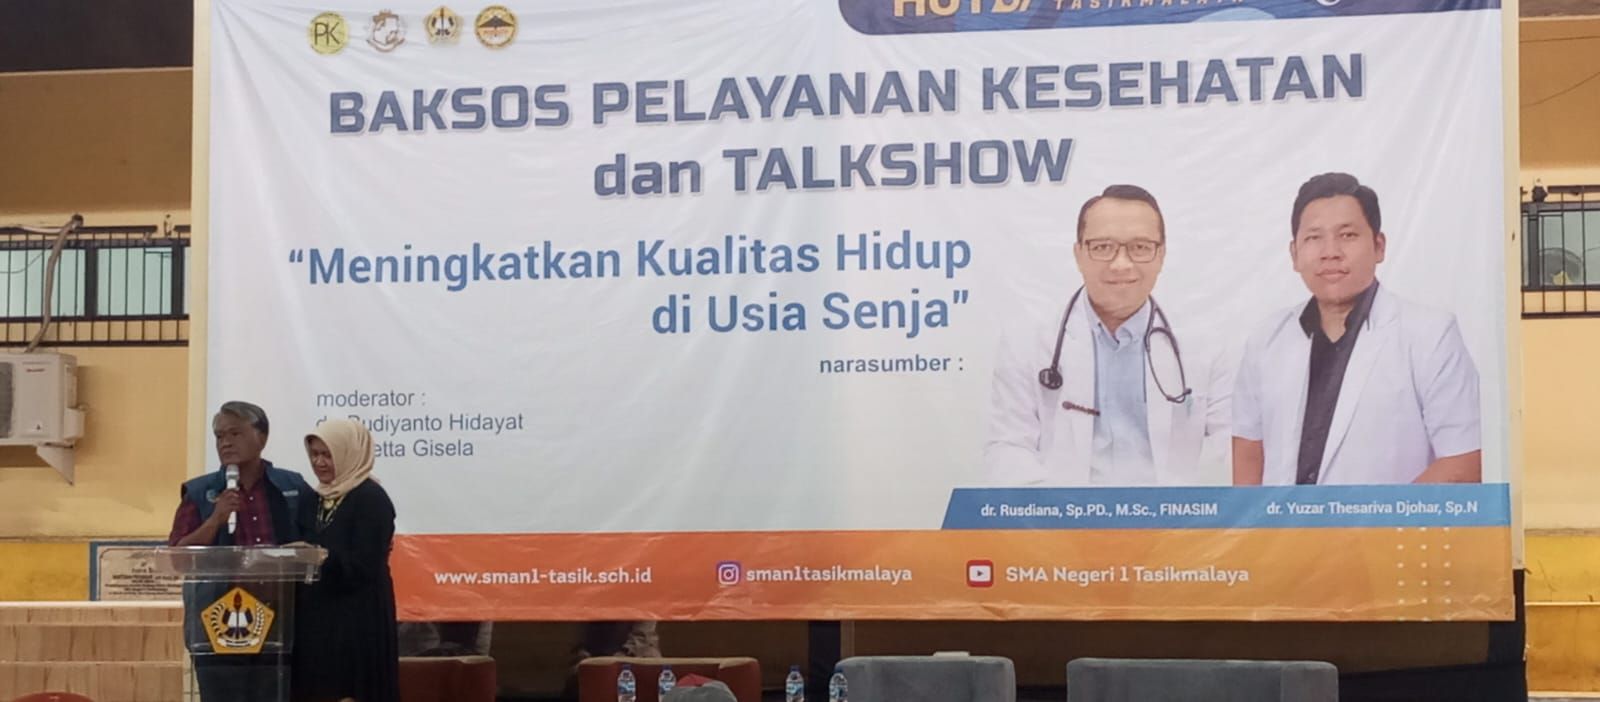 Kepala Dinas Kesehatan saat memberi sambutan bersama Hj. Evi Suhadningsih, M.Pd yang merupakan salah seorang tenaga pengajarnya. *